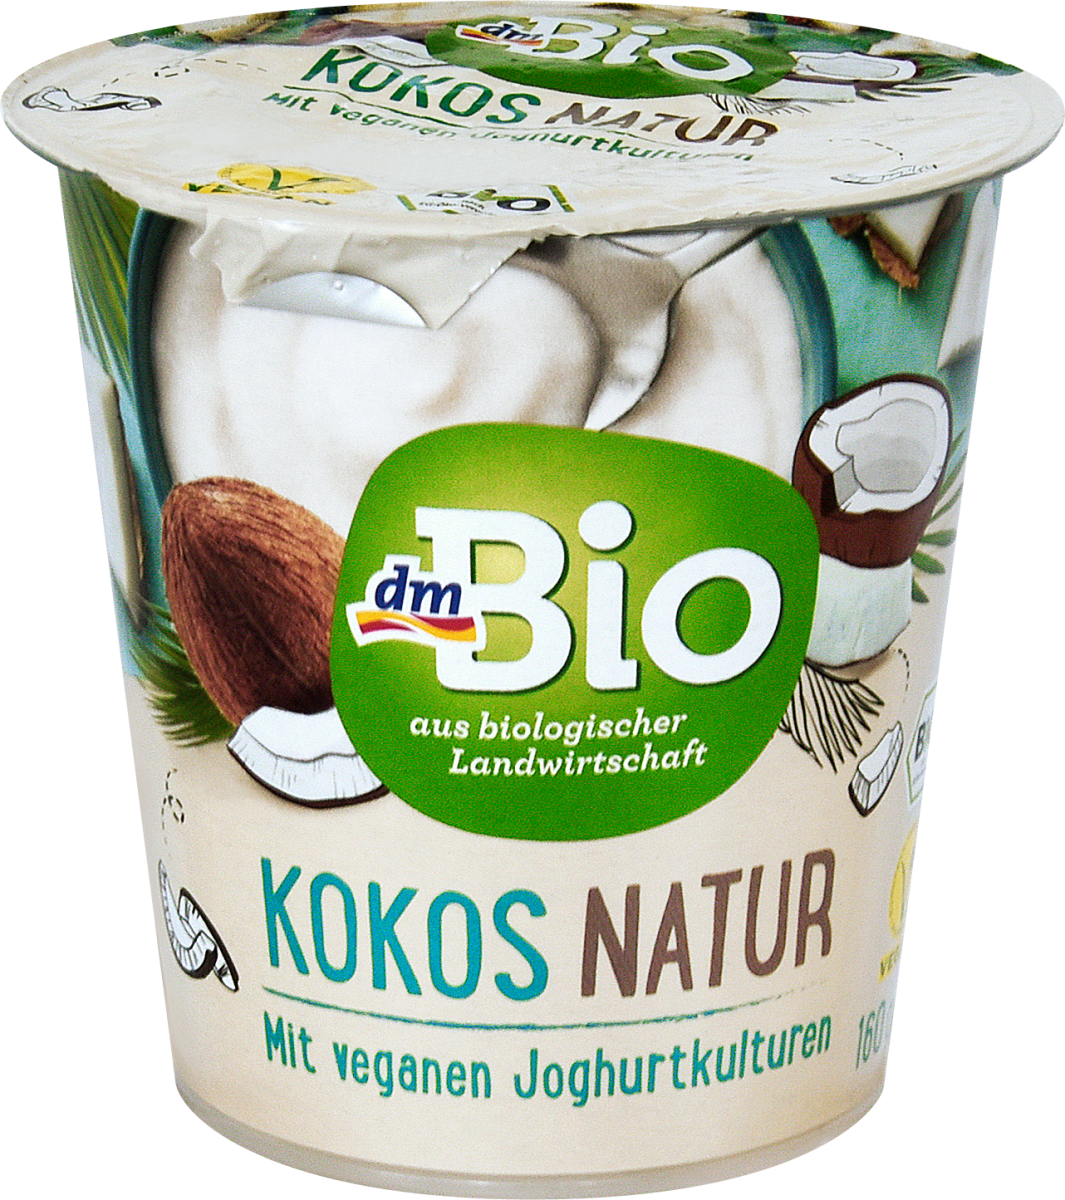 Dmbio Kokos Natur Mit Veganen Joghurtkulturen 160 G Dm At